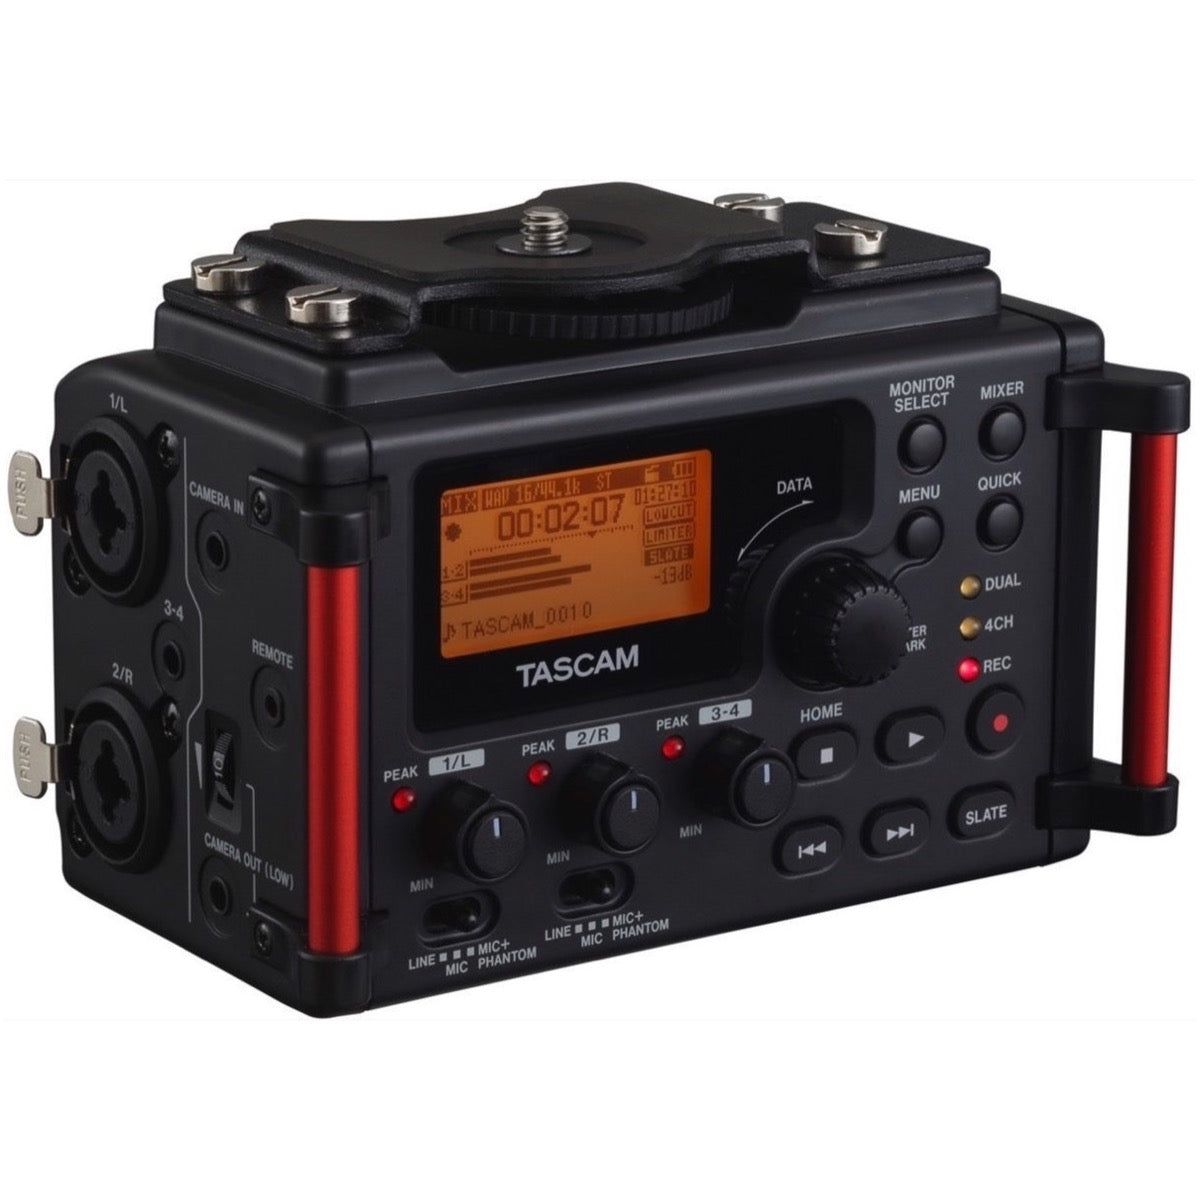 Tascam DR-60DmkII 4-Track Portable Audio Recorder